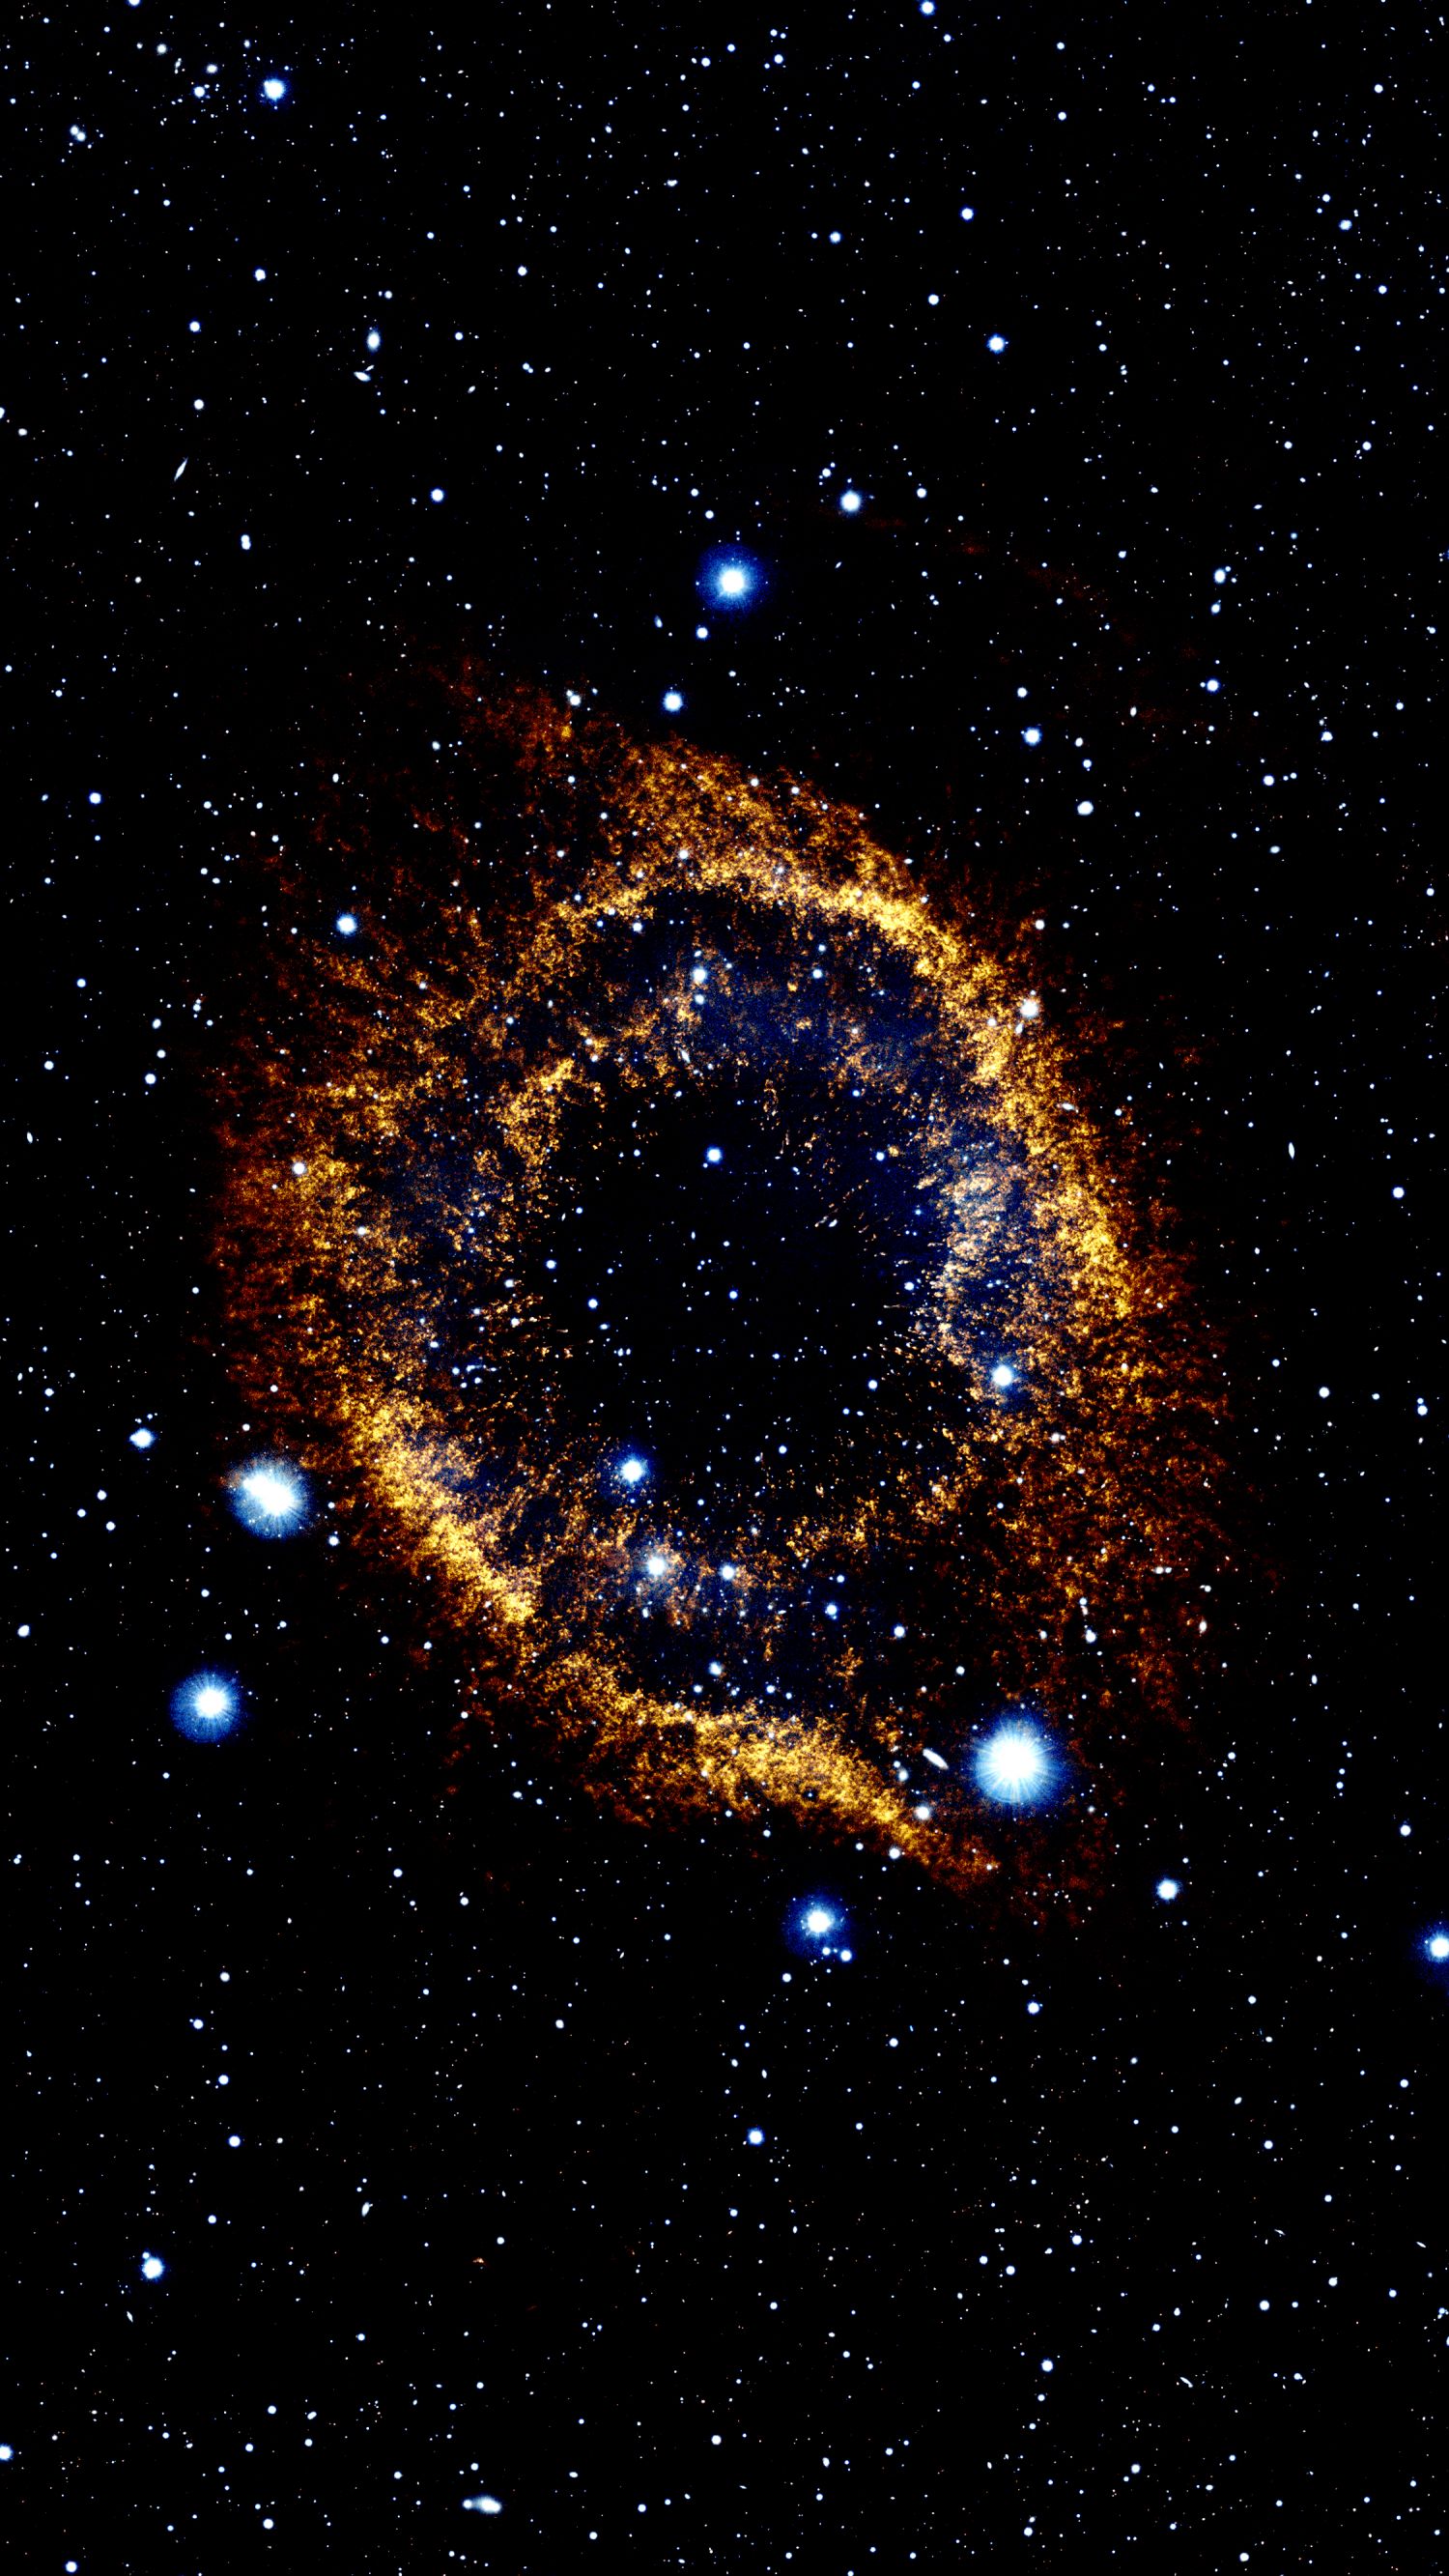 J. Emerson - VISTA's look at the Helix Nebula [Edited].jpg